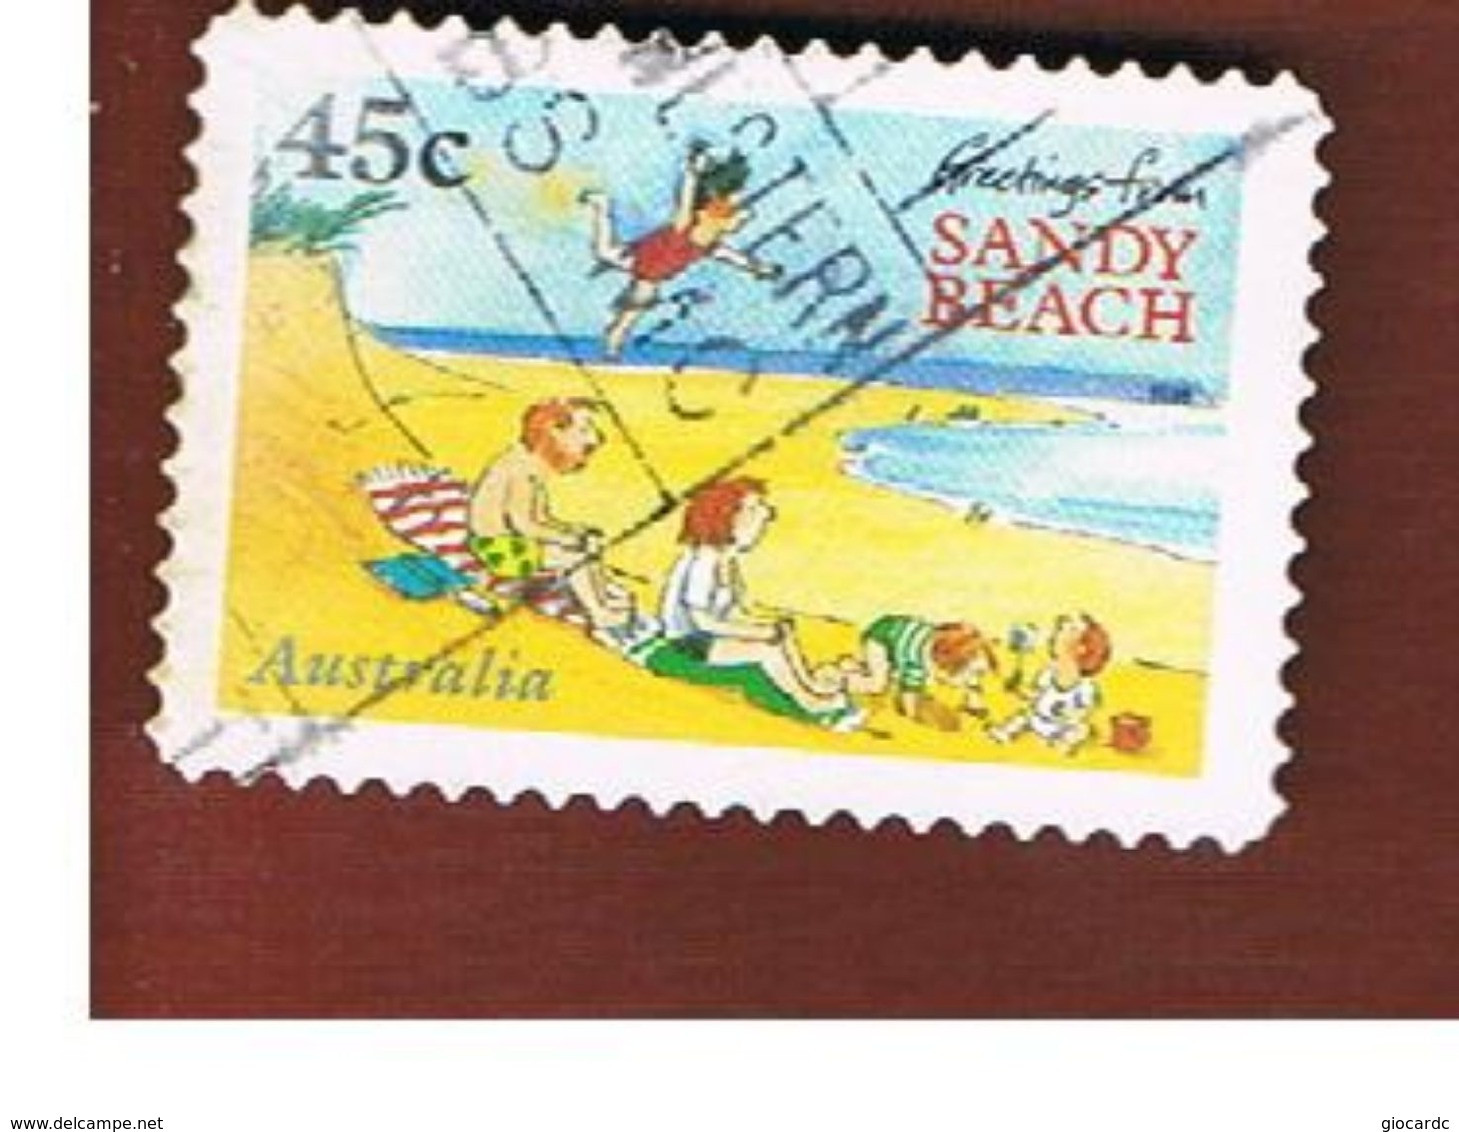 AUSTRALIA  -  SG 1635 -      1996  BOOKS FOR CHILDREN: SANDY BEACH         -       USED - Usados